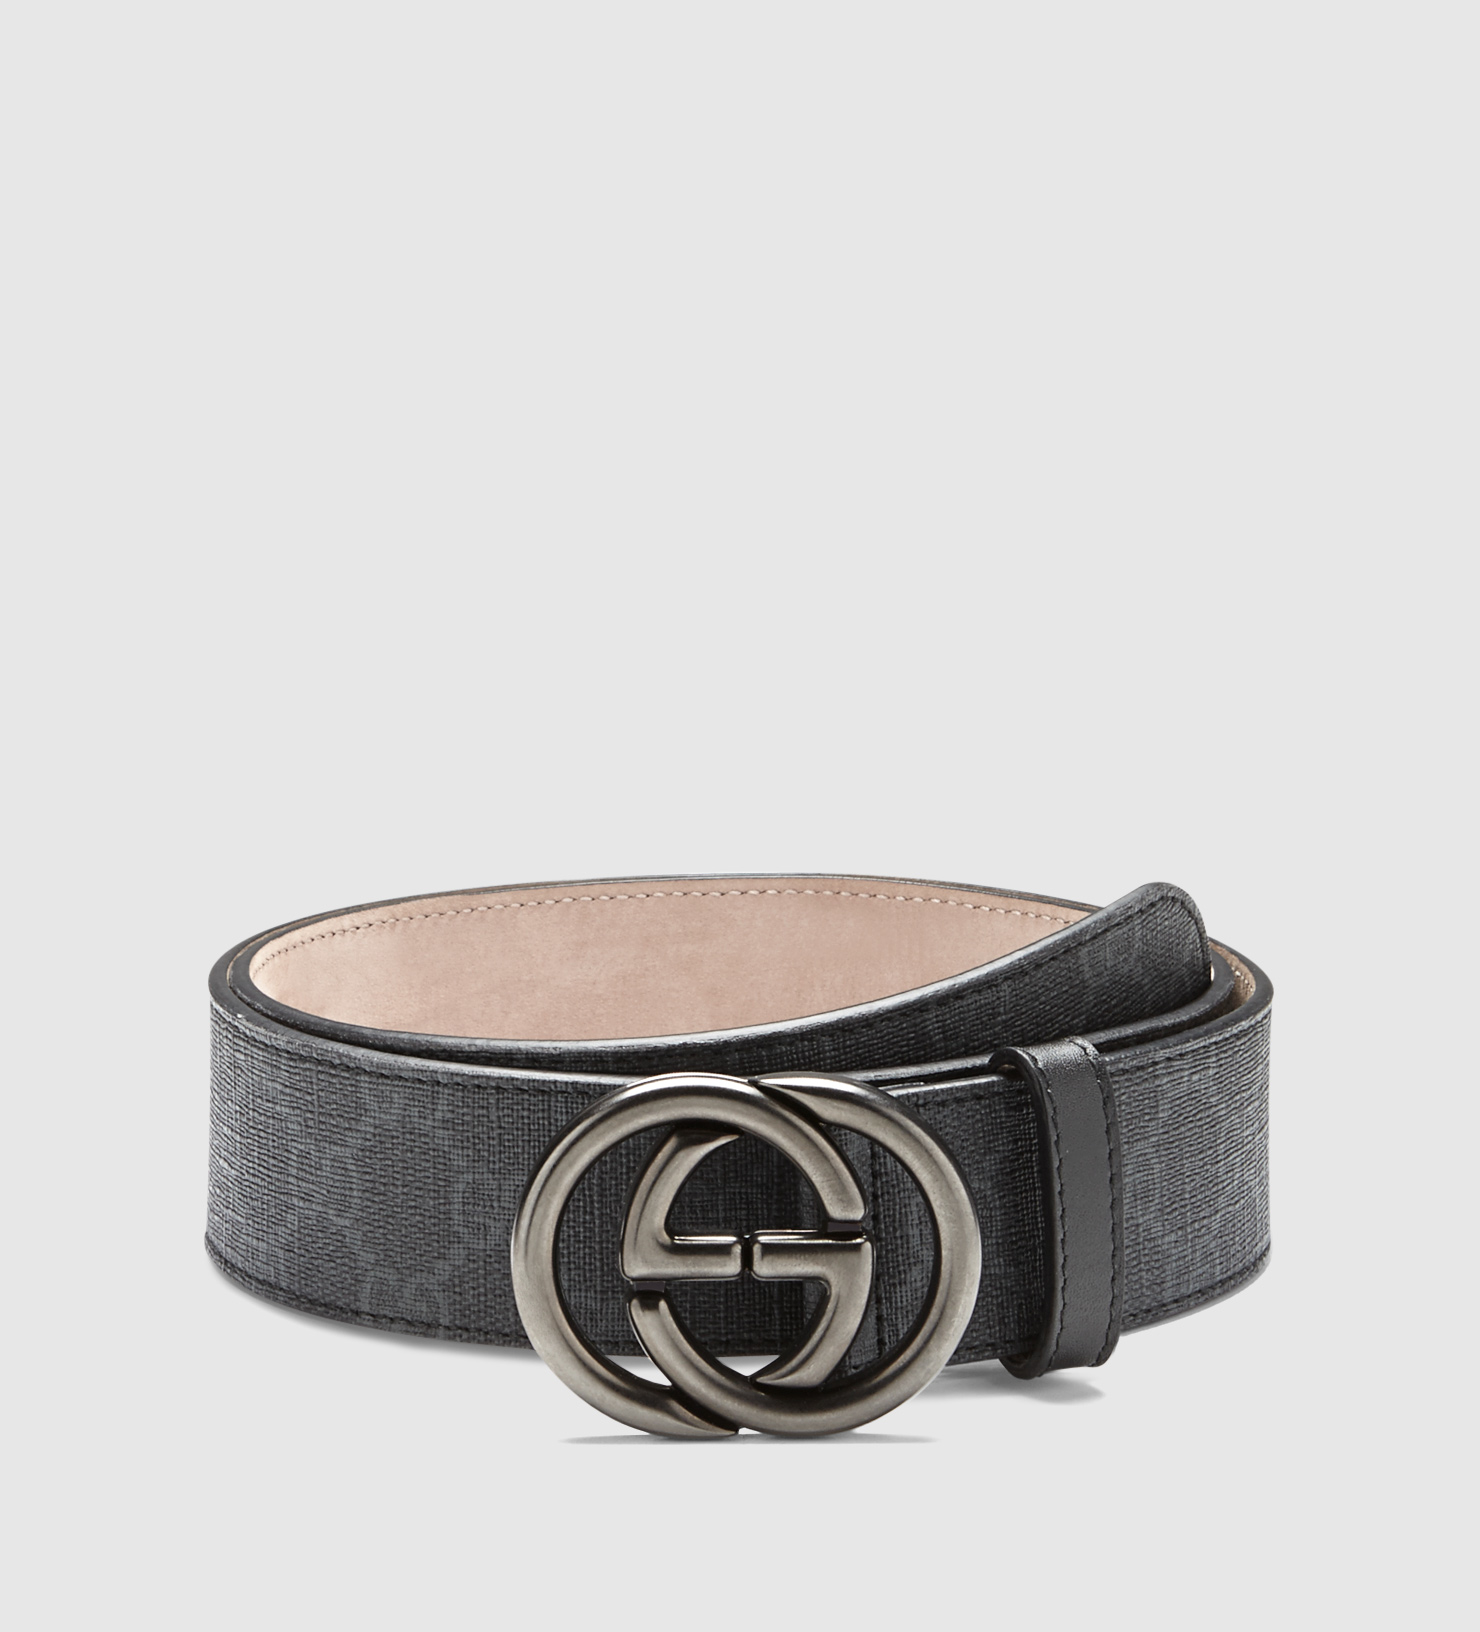 Lyst - Gucci Gg Supreme Canvas Belt With Interlocking G Buckle in Black ...